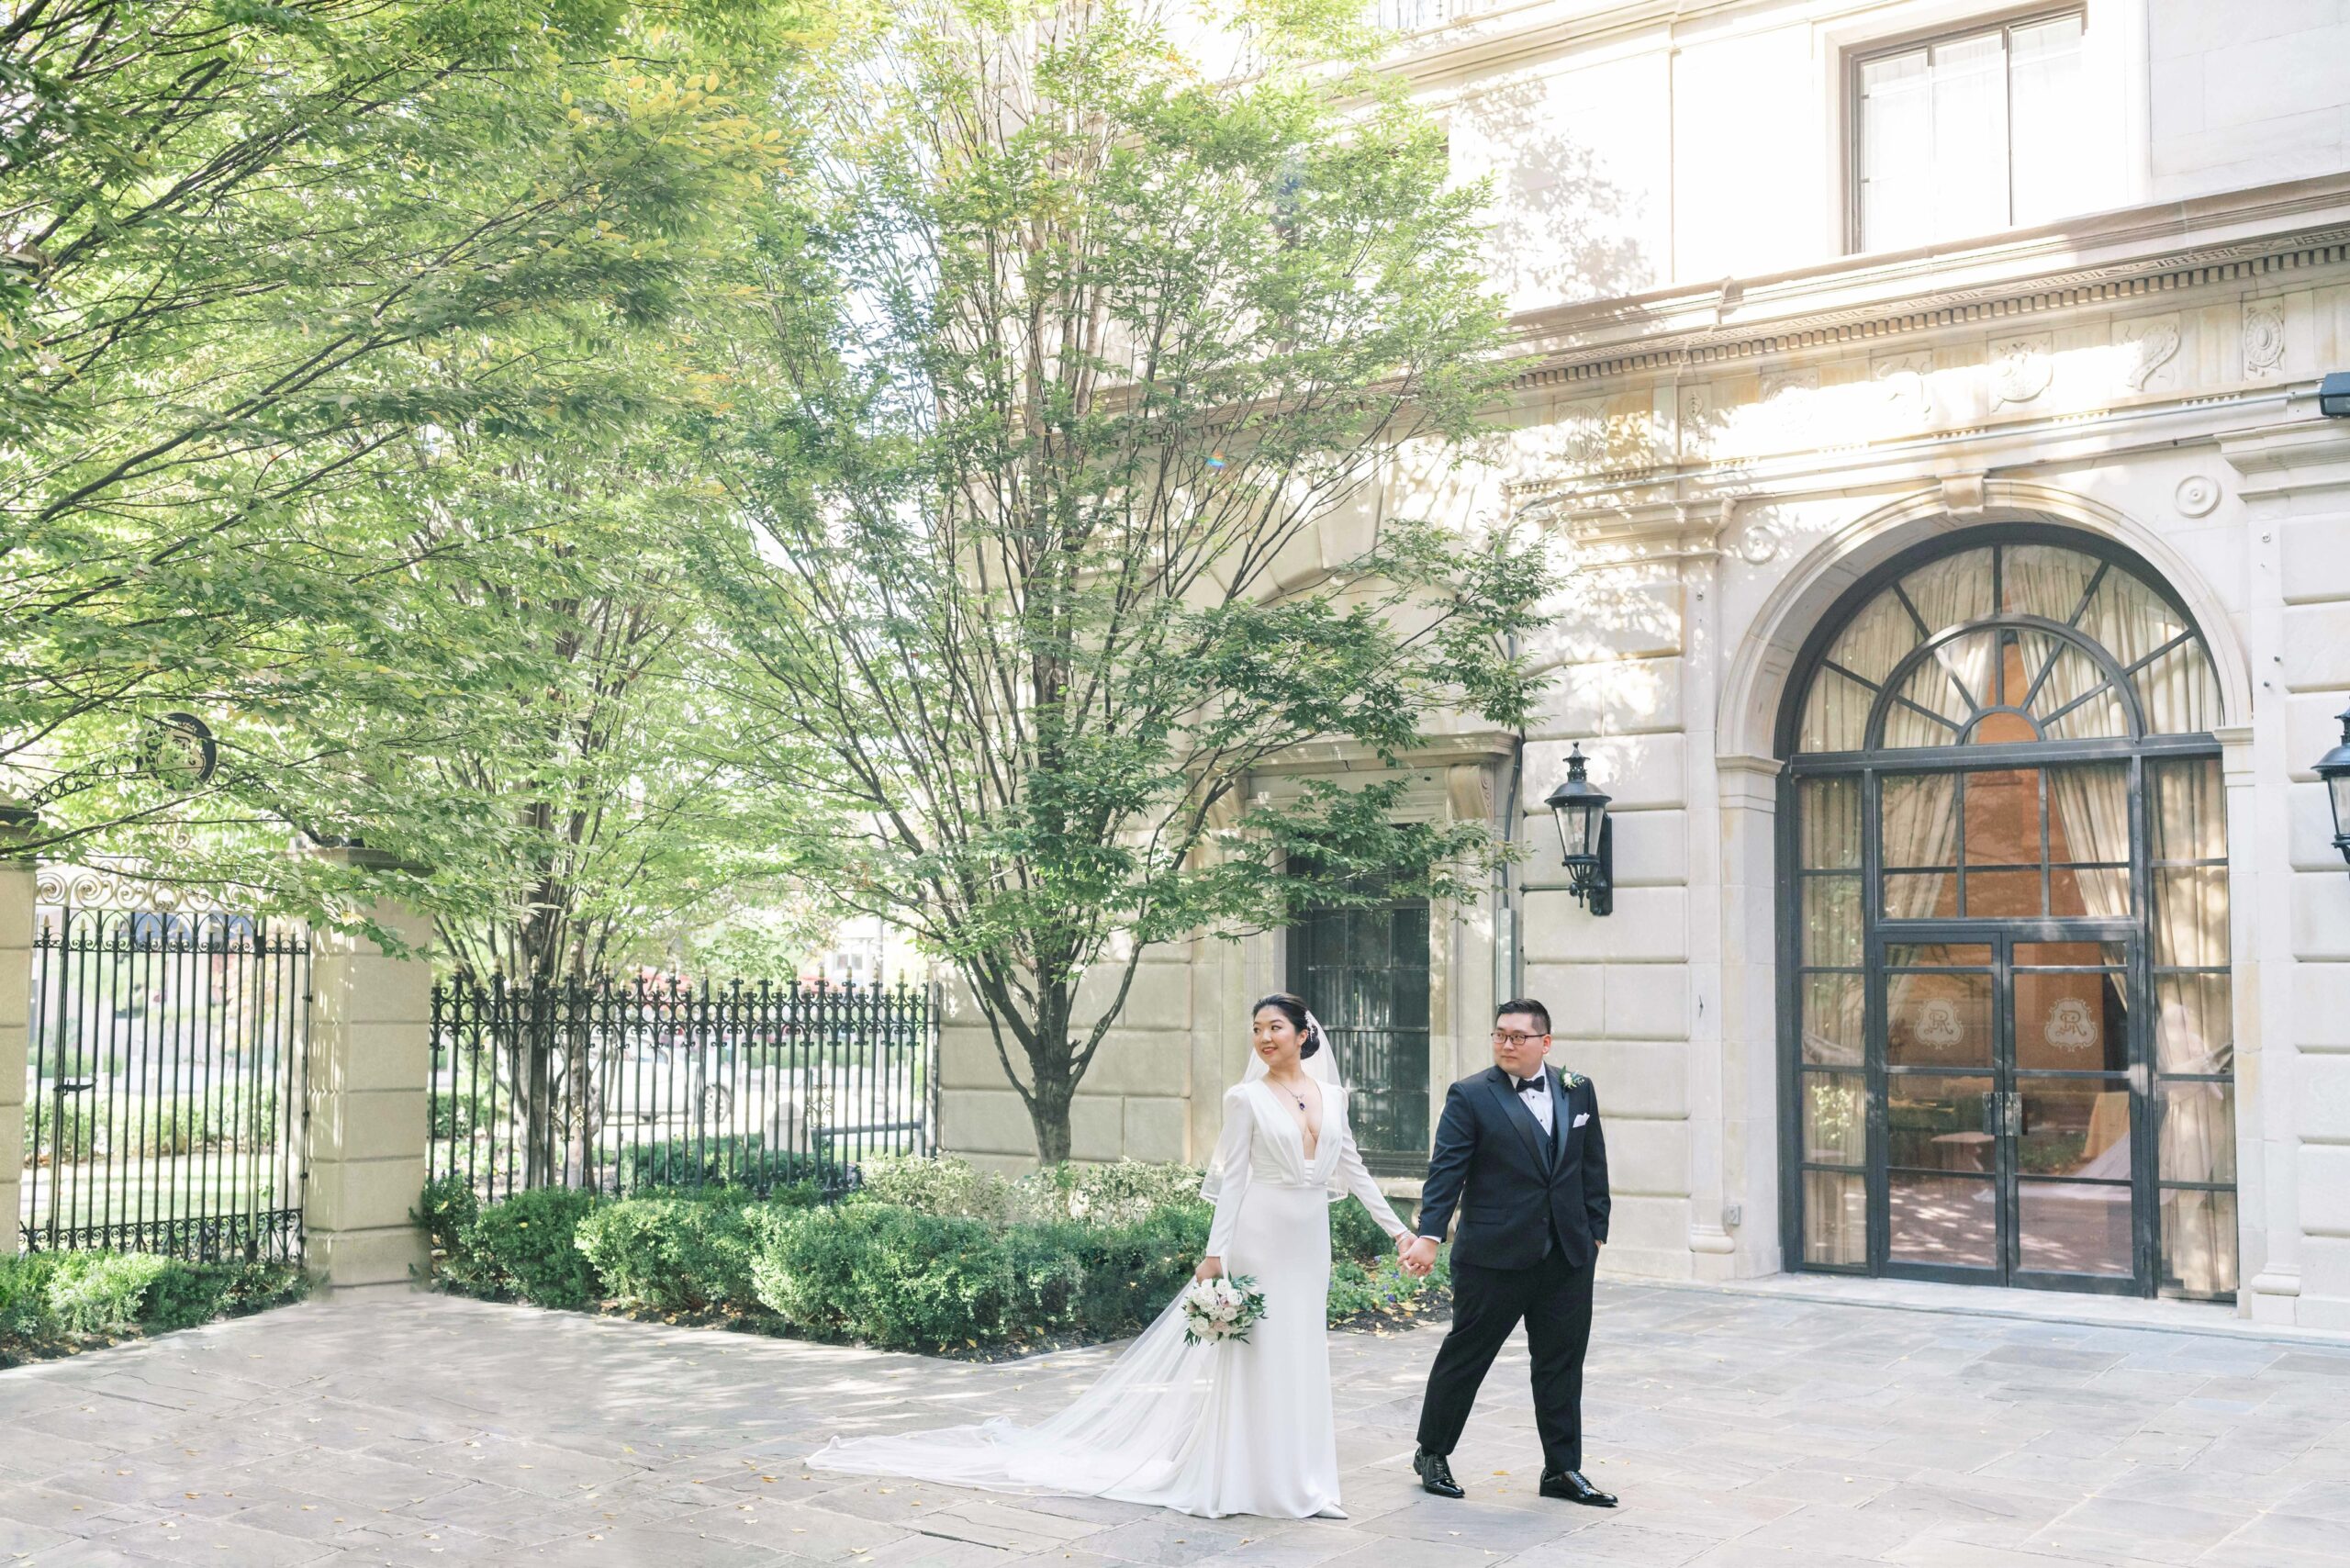 An elegant, classic black tie wedding at the St. Regis hotel in downtown Washington, DC.